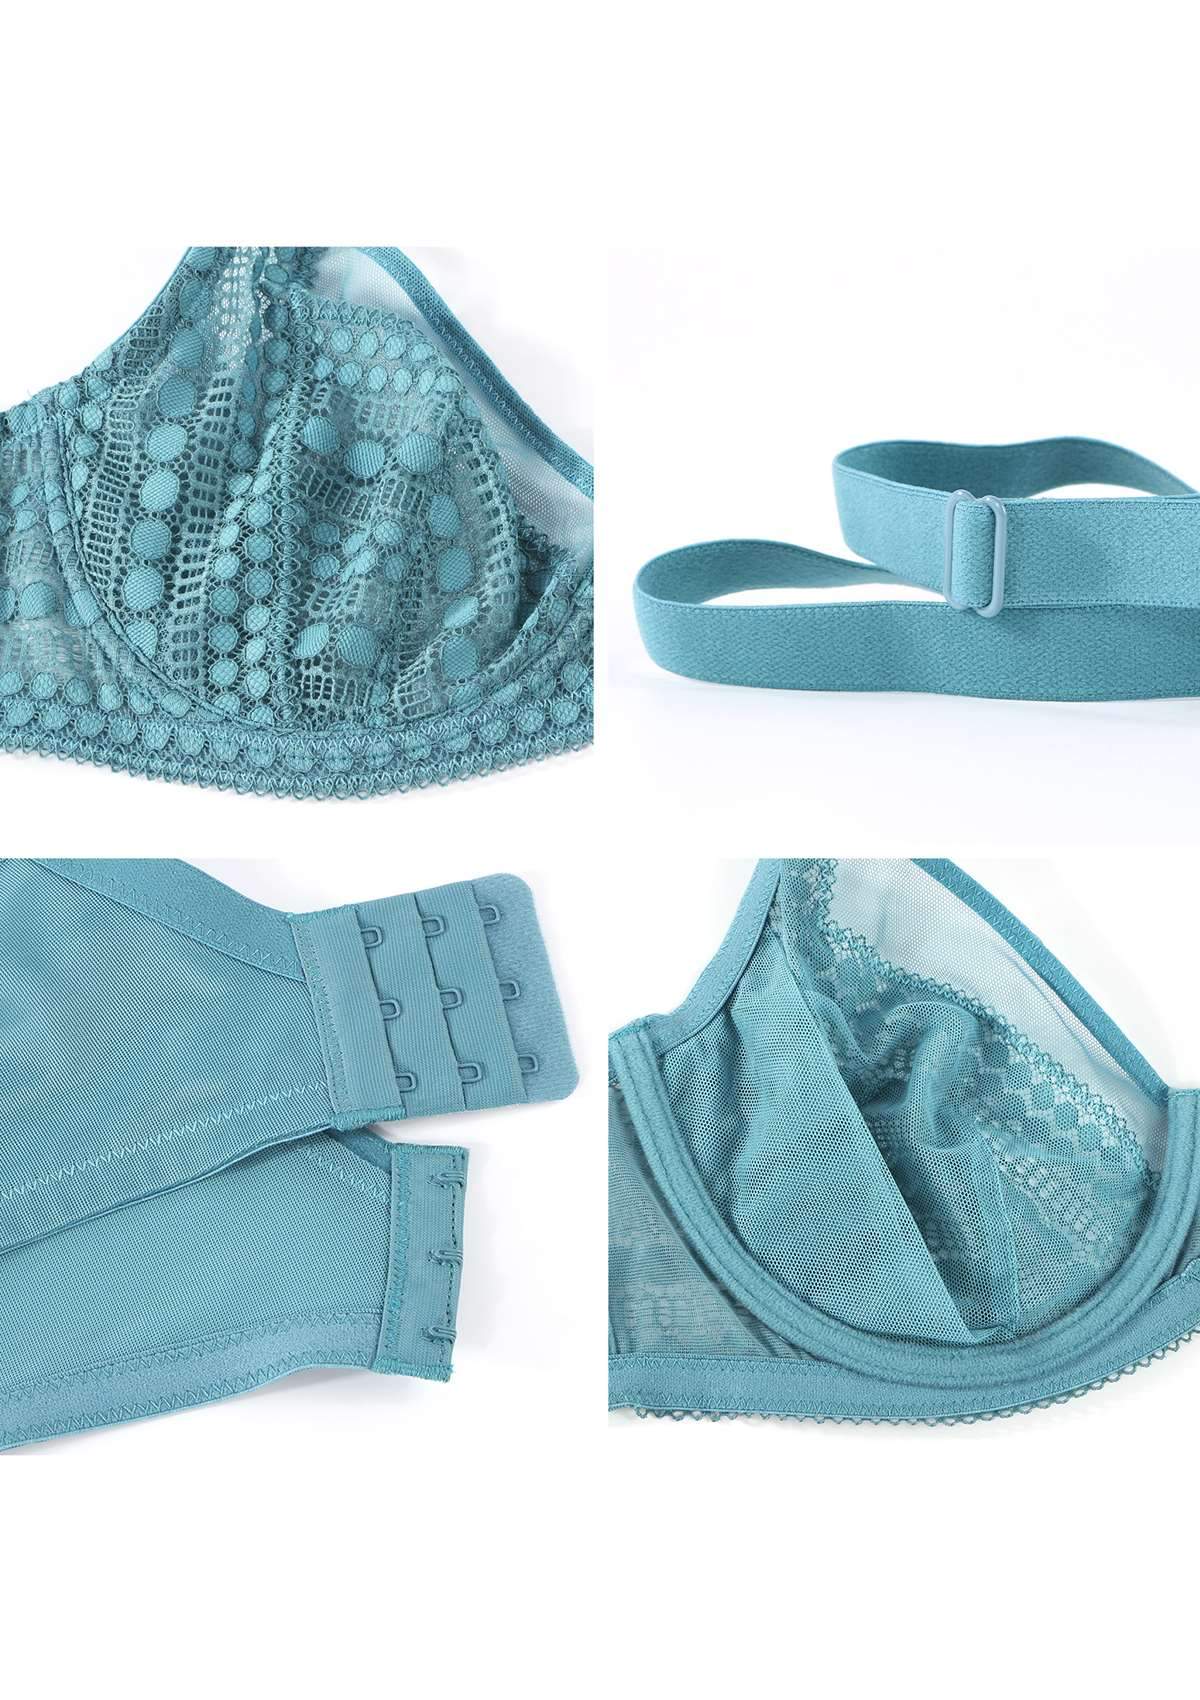 HSIA Heroine Matching Bra And Underwear Set: Bra For Big Boobs - Brittany Blue / 38 / D